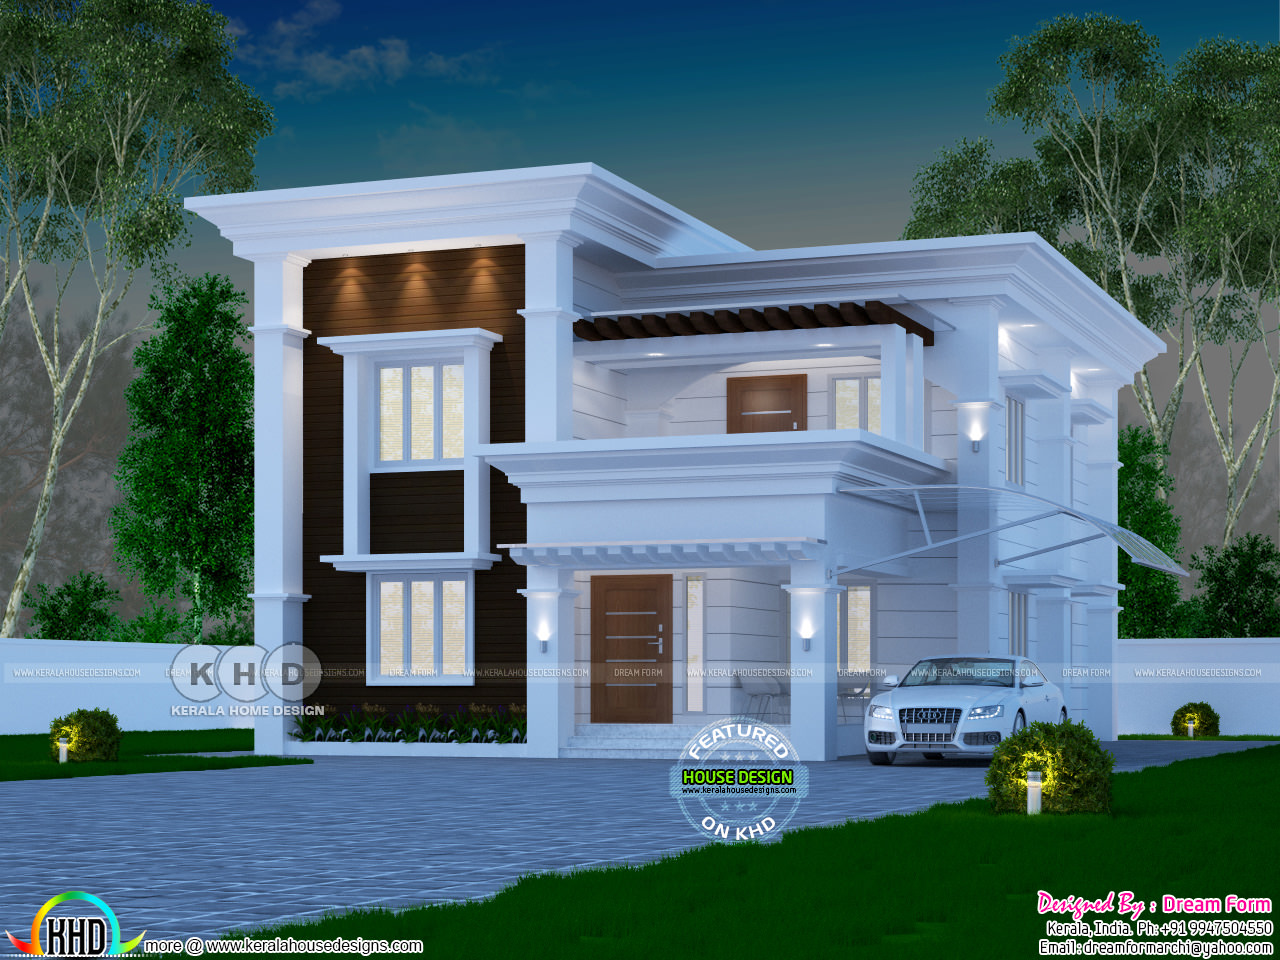  4  bedroom  2060 sq ft Arabian style  home  design  Kerala  